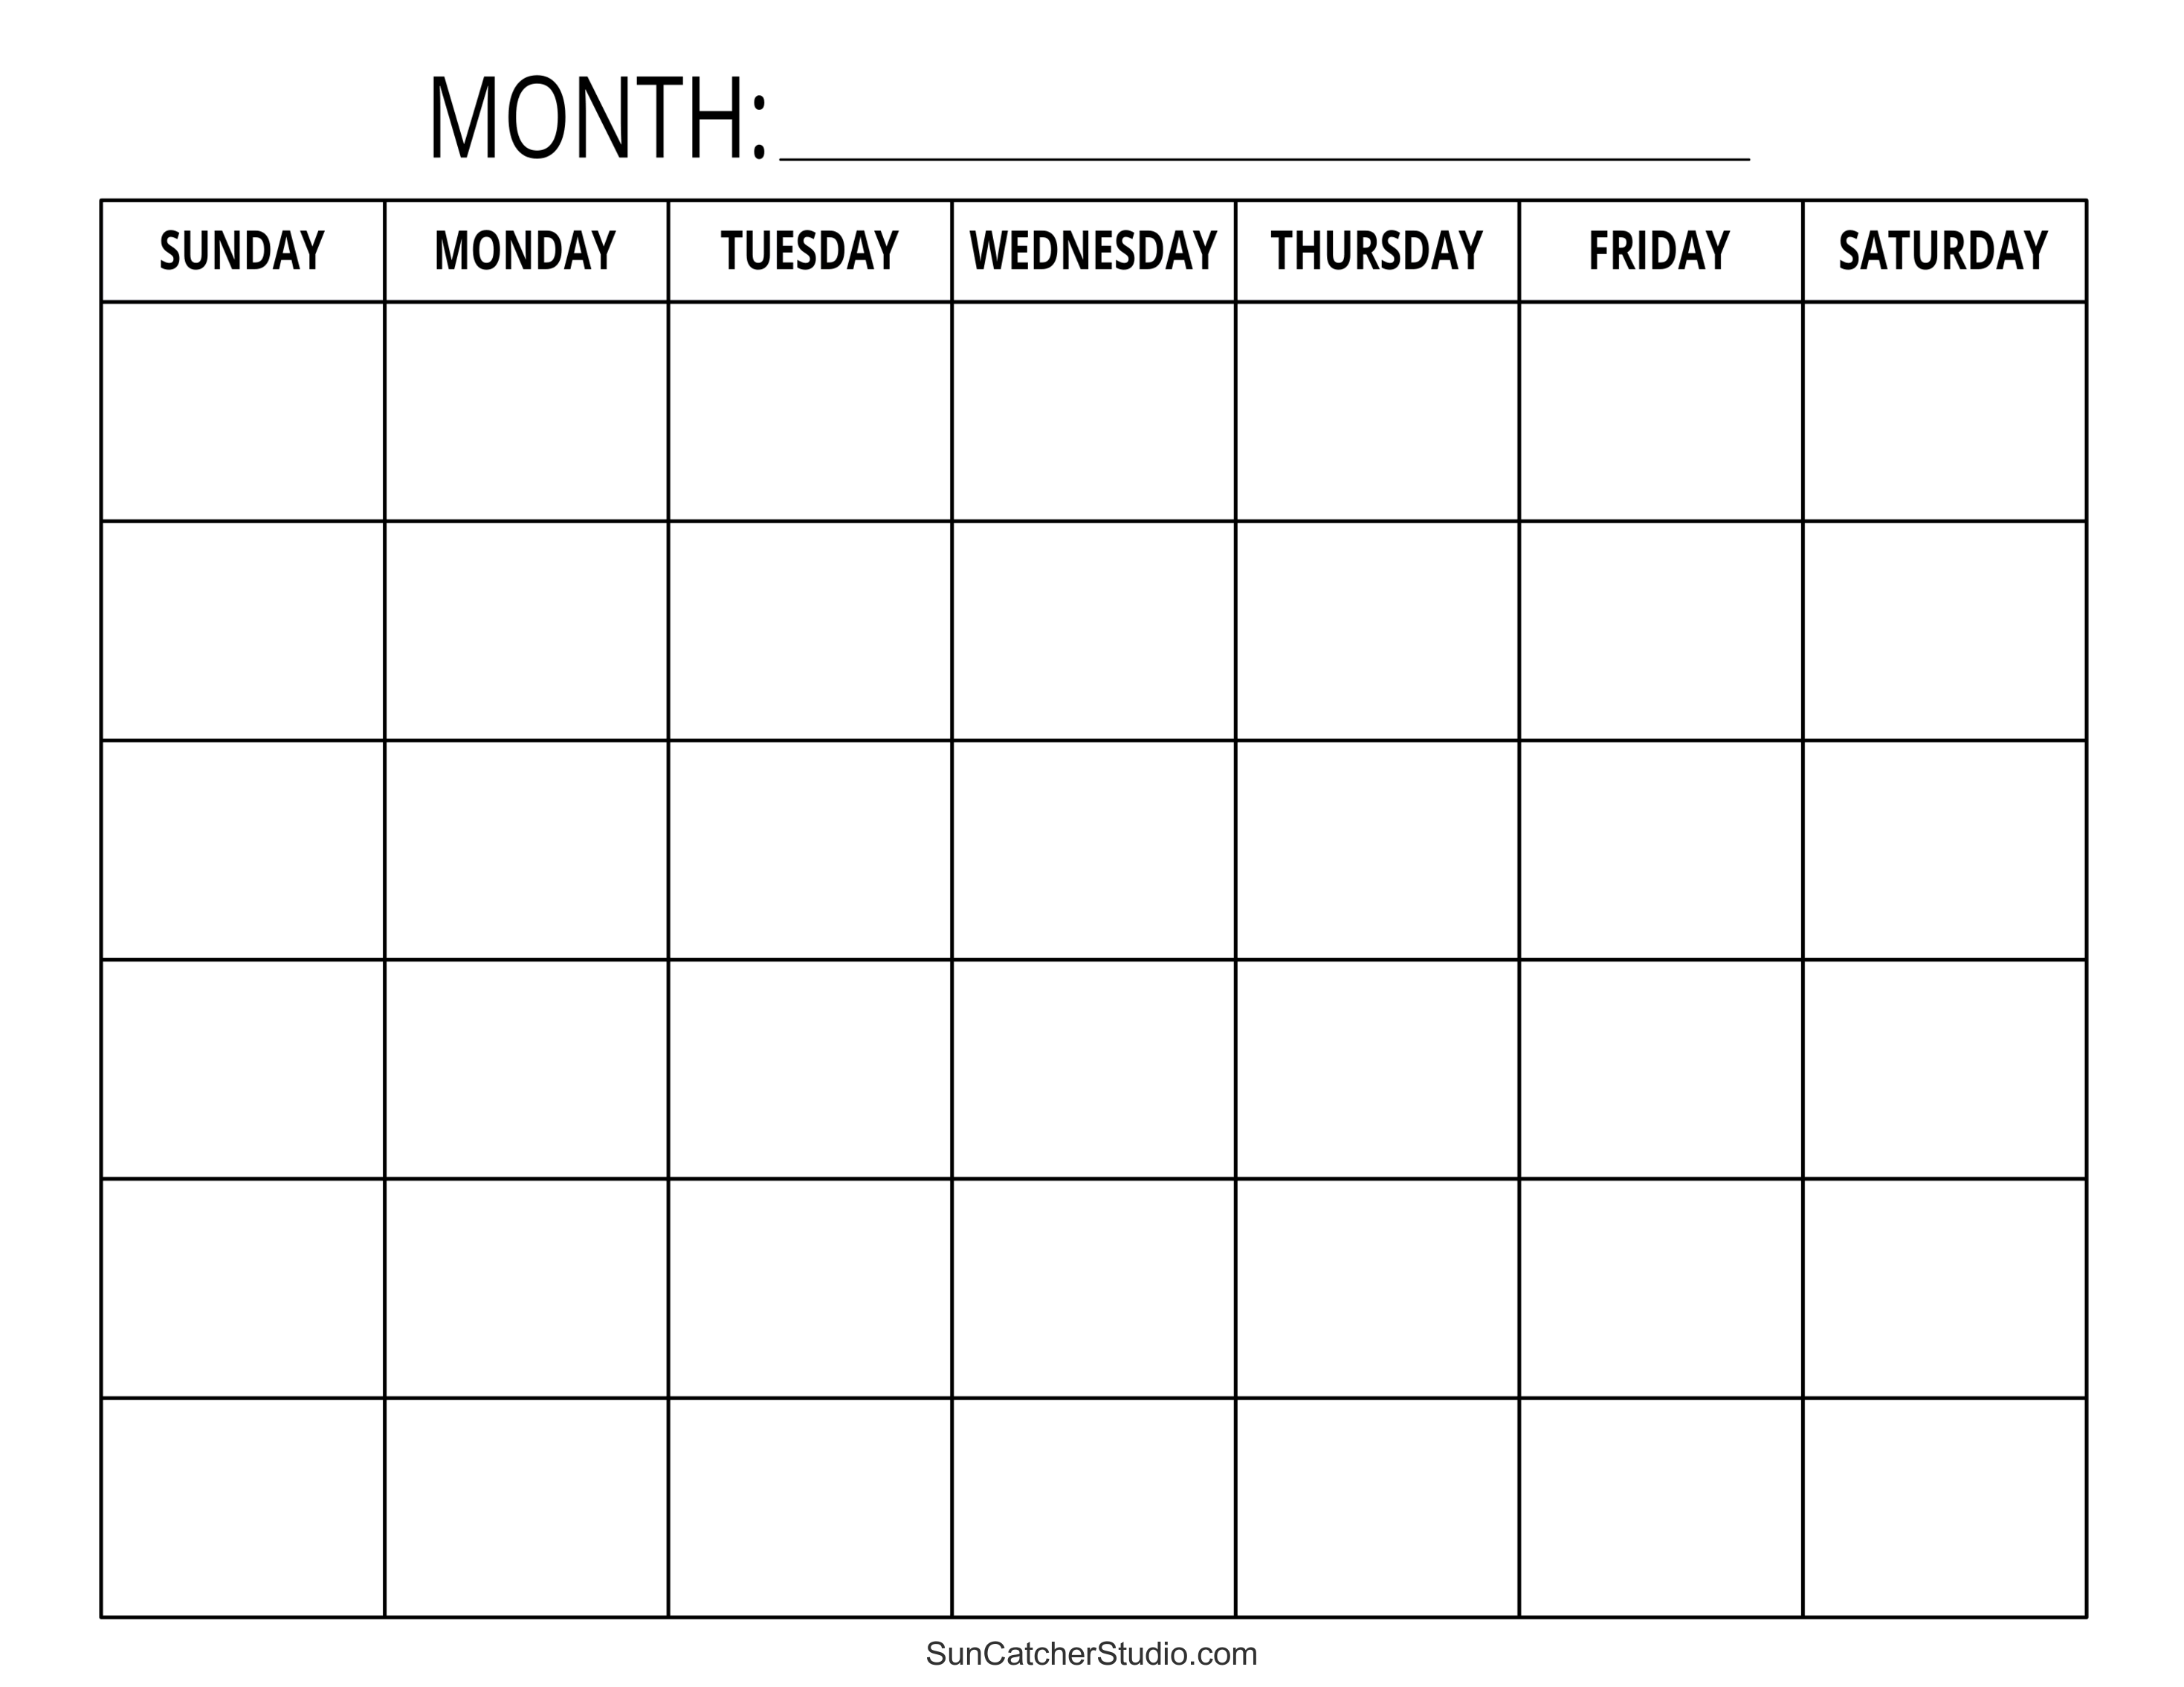 monday friday calendar template